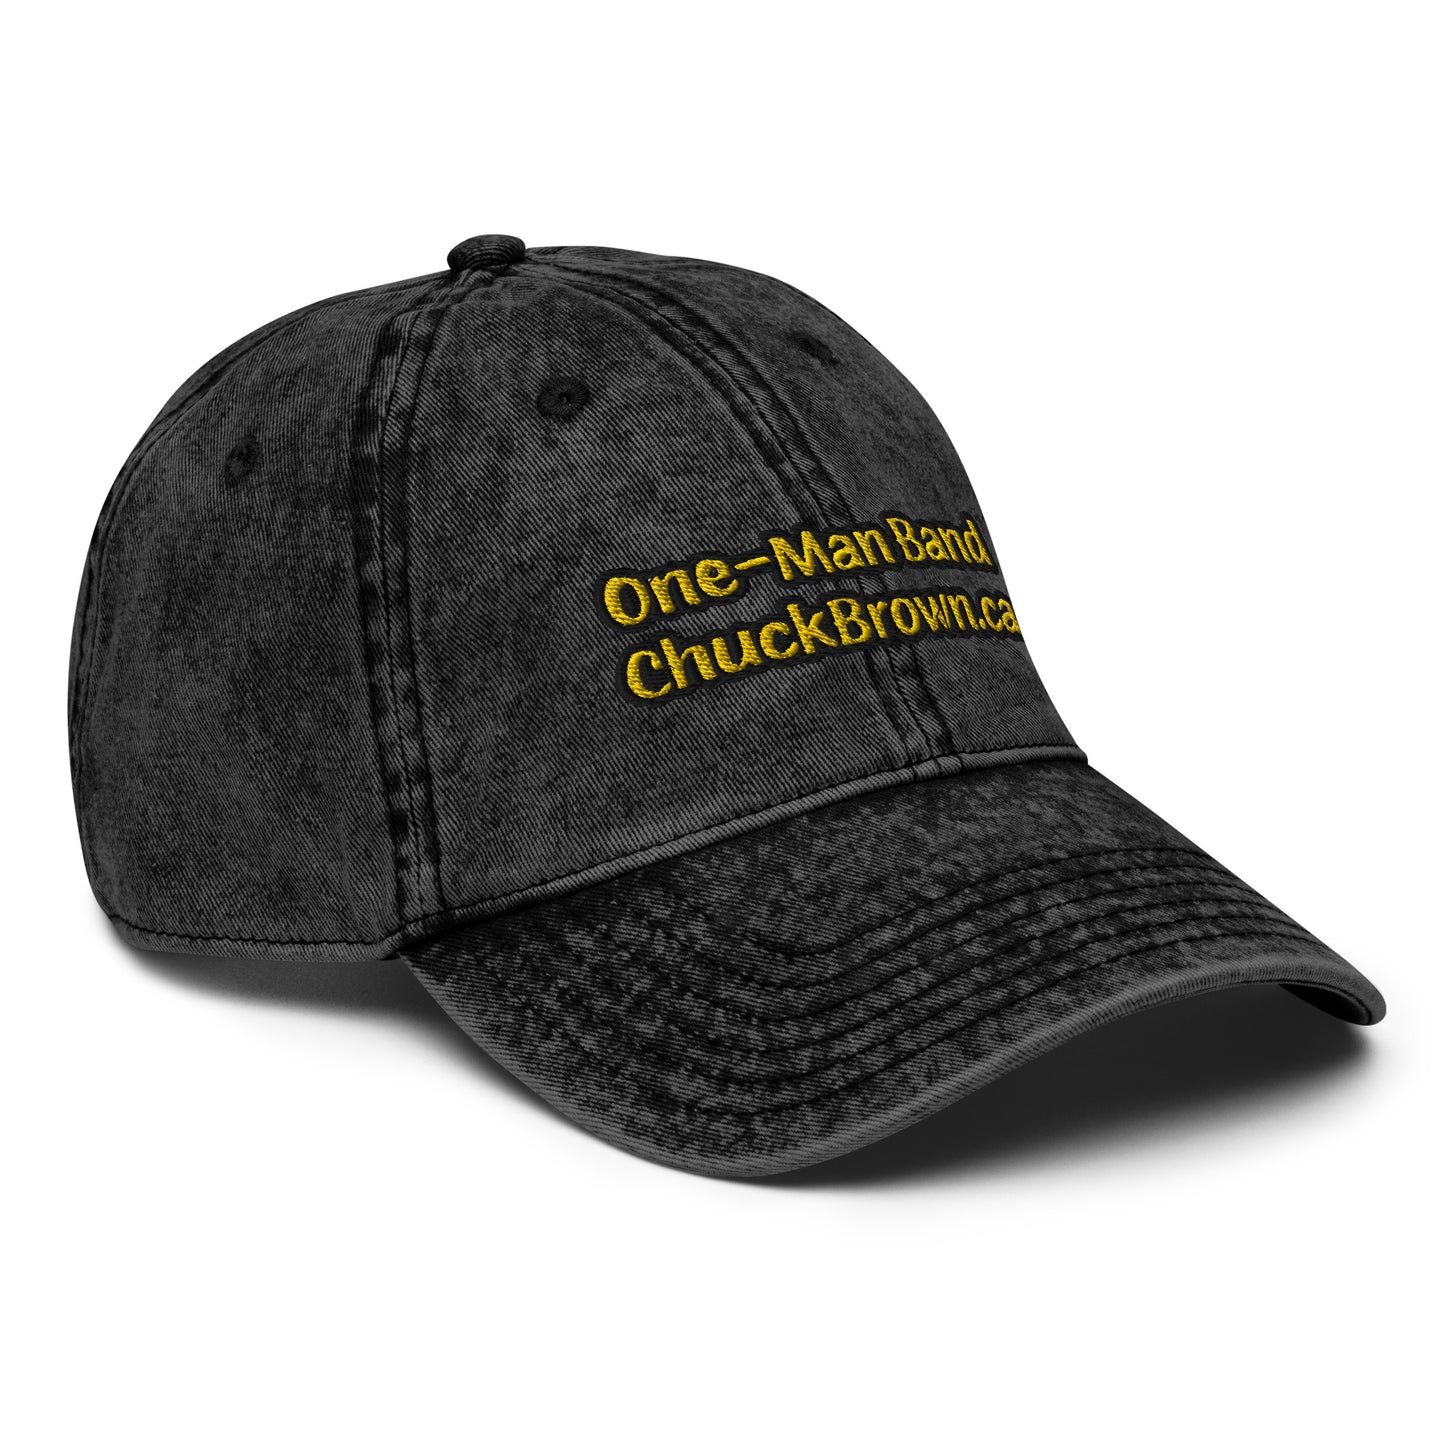 'CB' vintage cotton twill cap hat